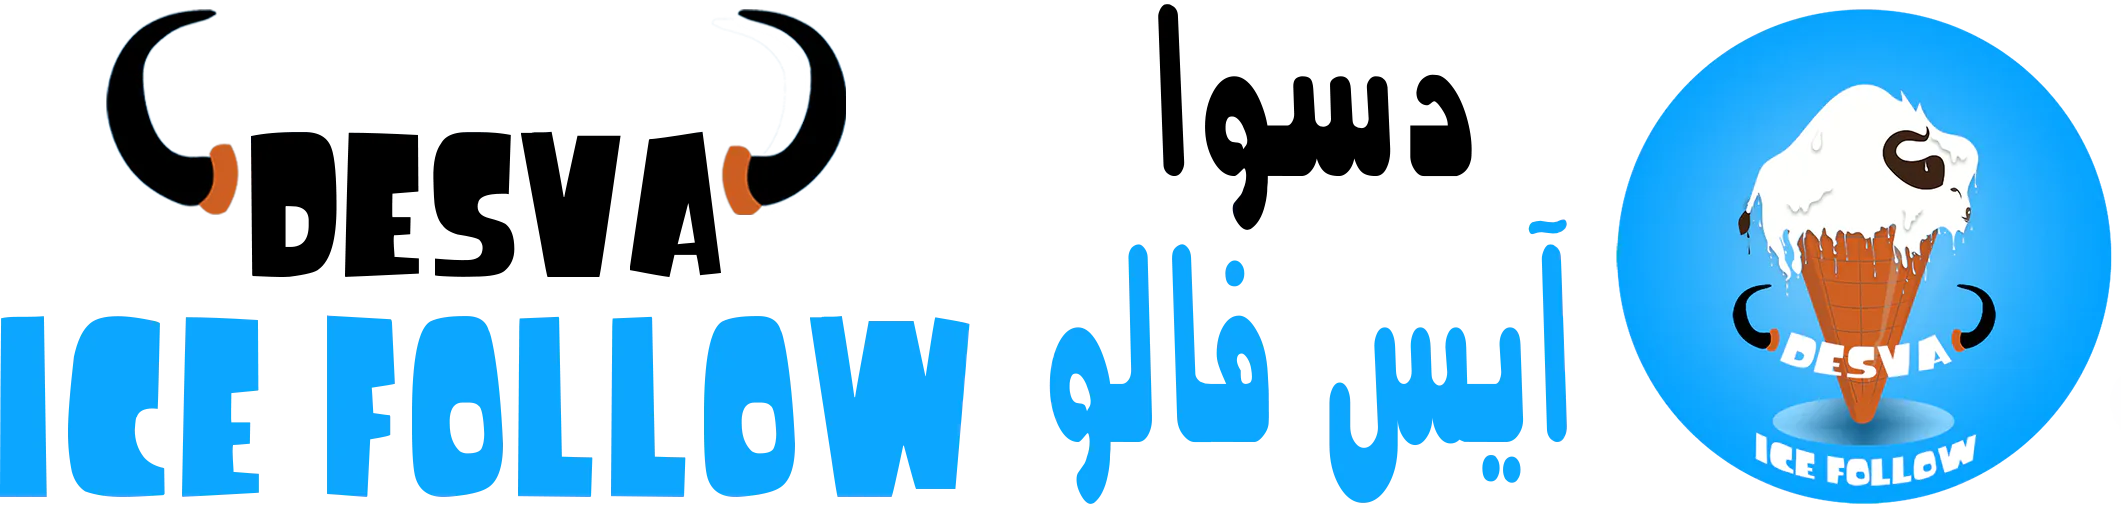 logo icefollow desva2121 512